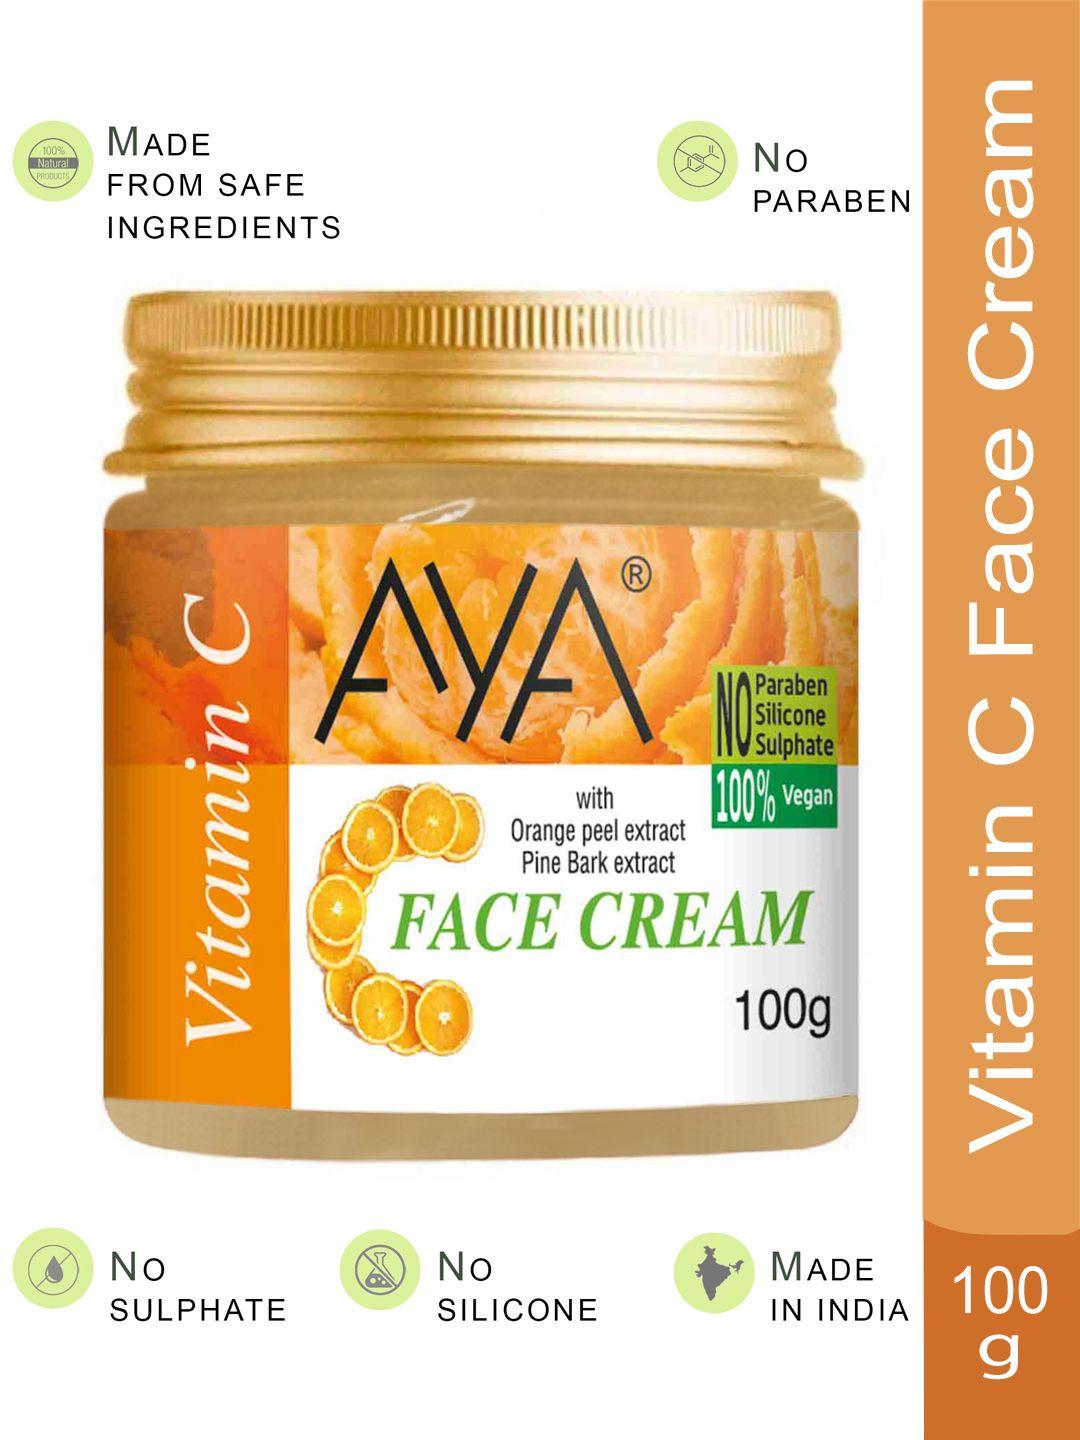 aya paraben-free & silicone-free vitamin c face cream with orange peel extract - 100 g